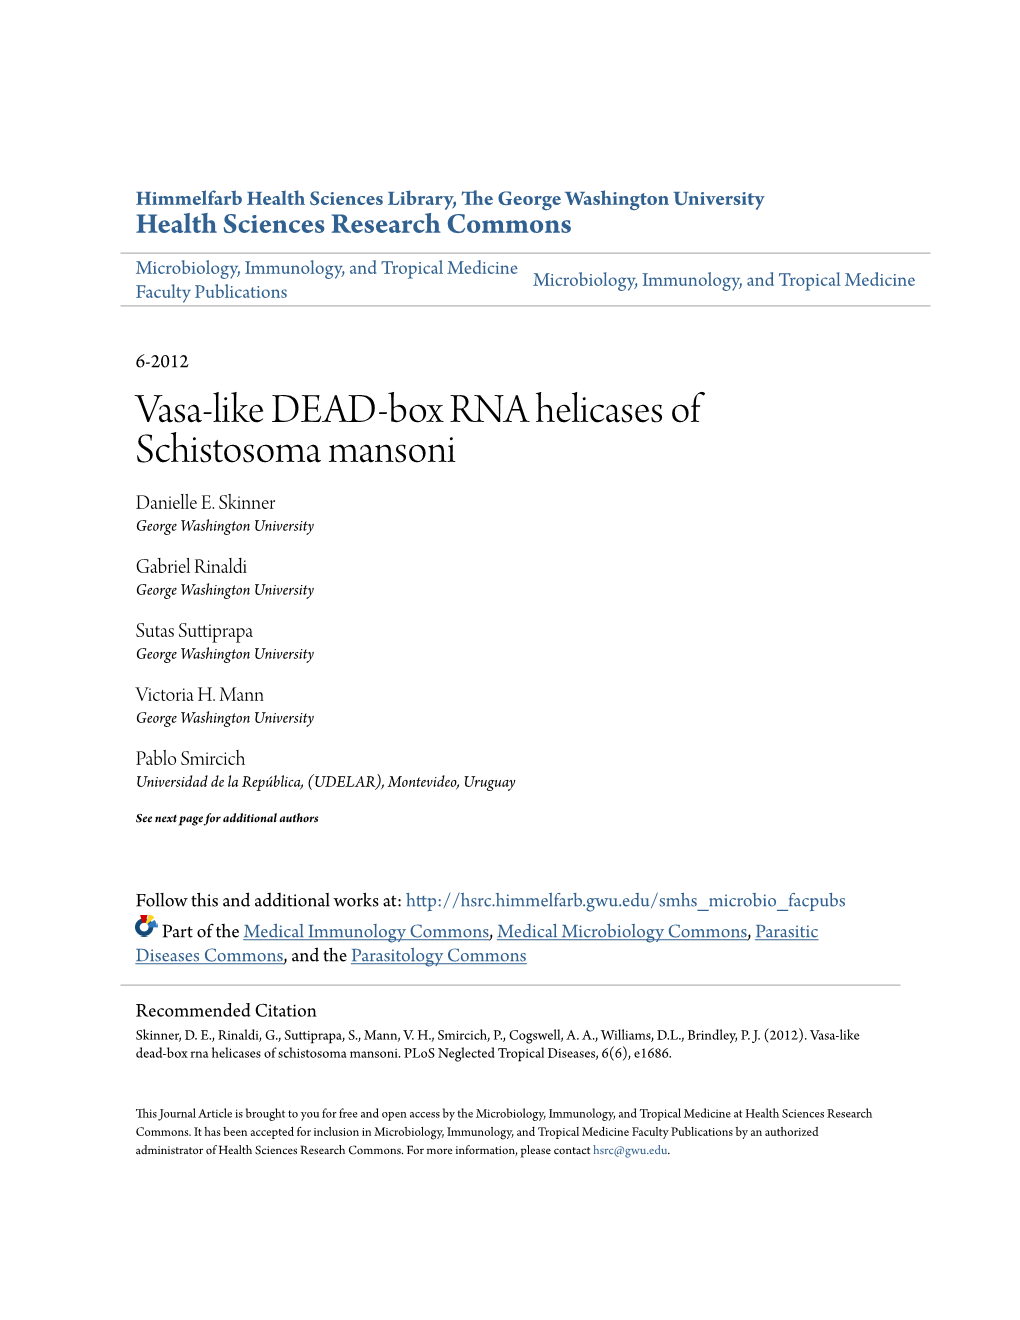 Vasa-Like DEAD-Box RNA Helicases of Schistosoma Mansoni Danielle E